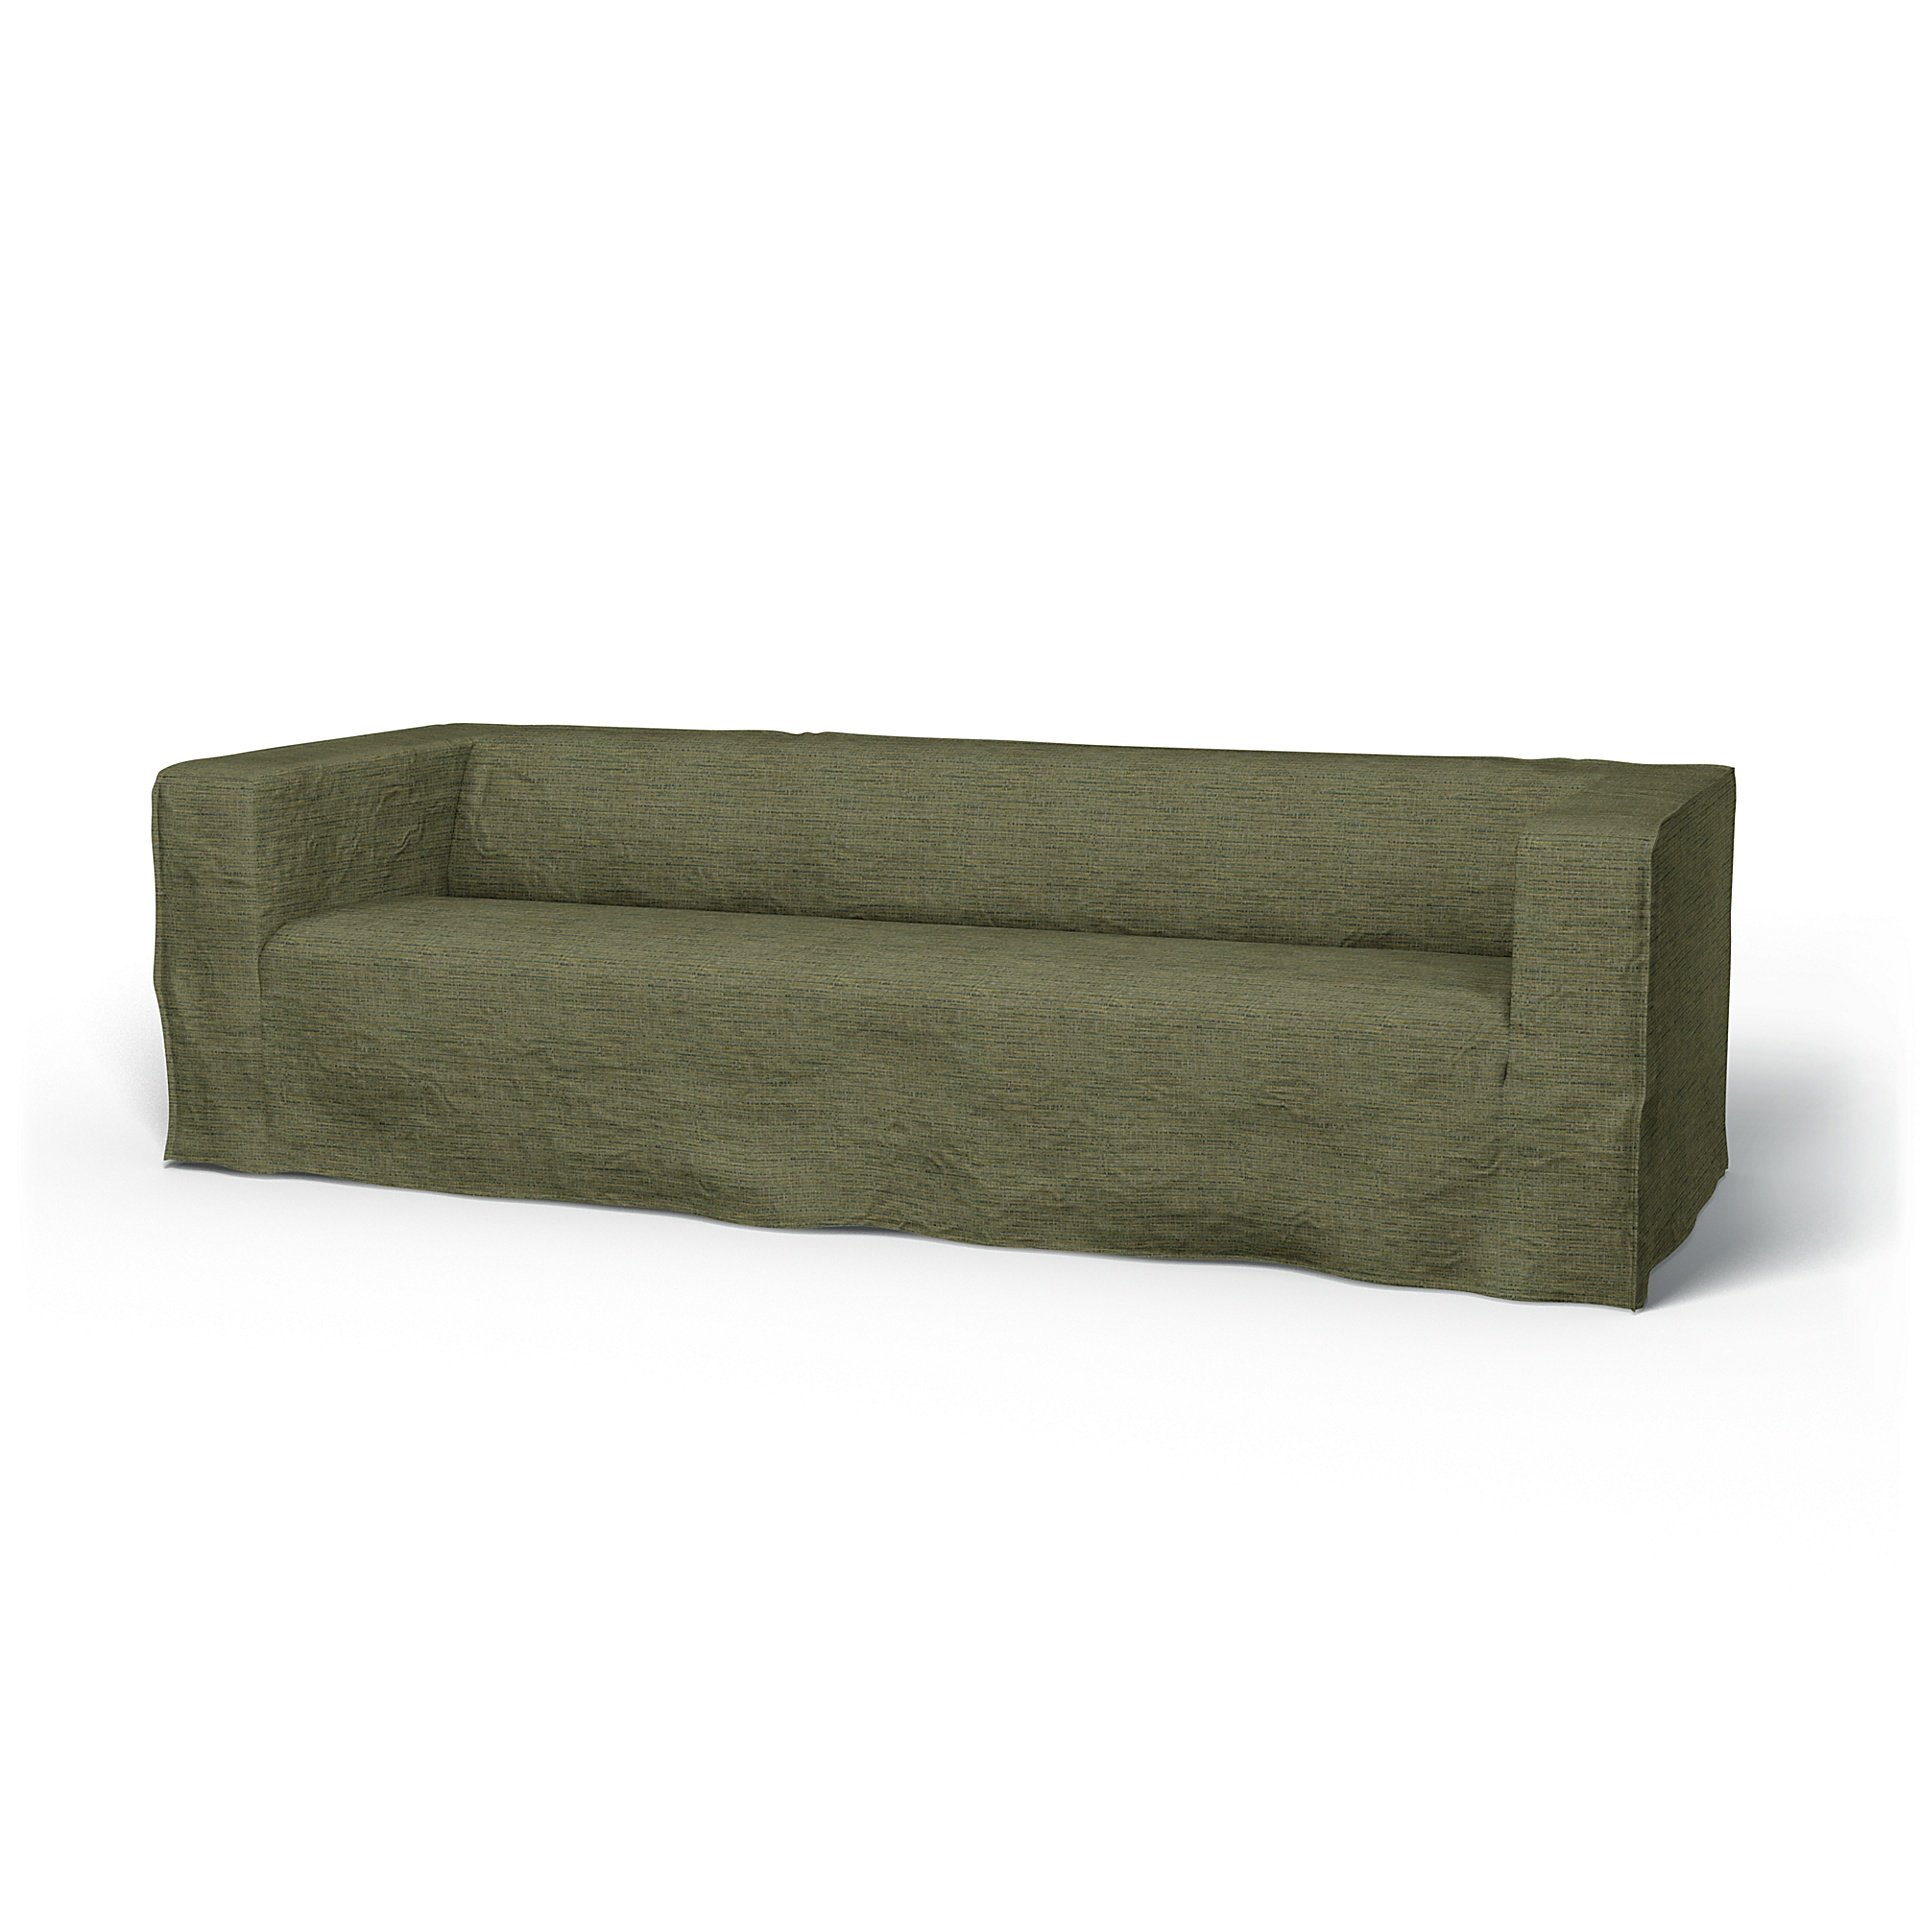 IKEA - Klippan 4 Seater Sofa Cover, Meadow Green, Boucle & Texture - Bemz